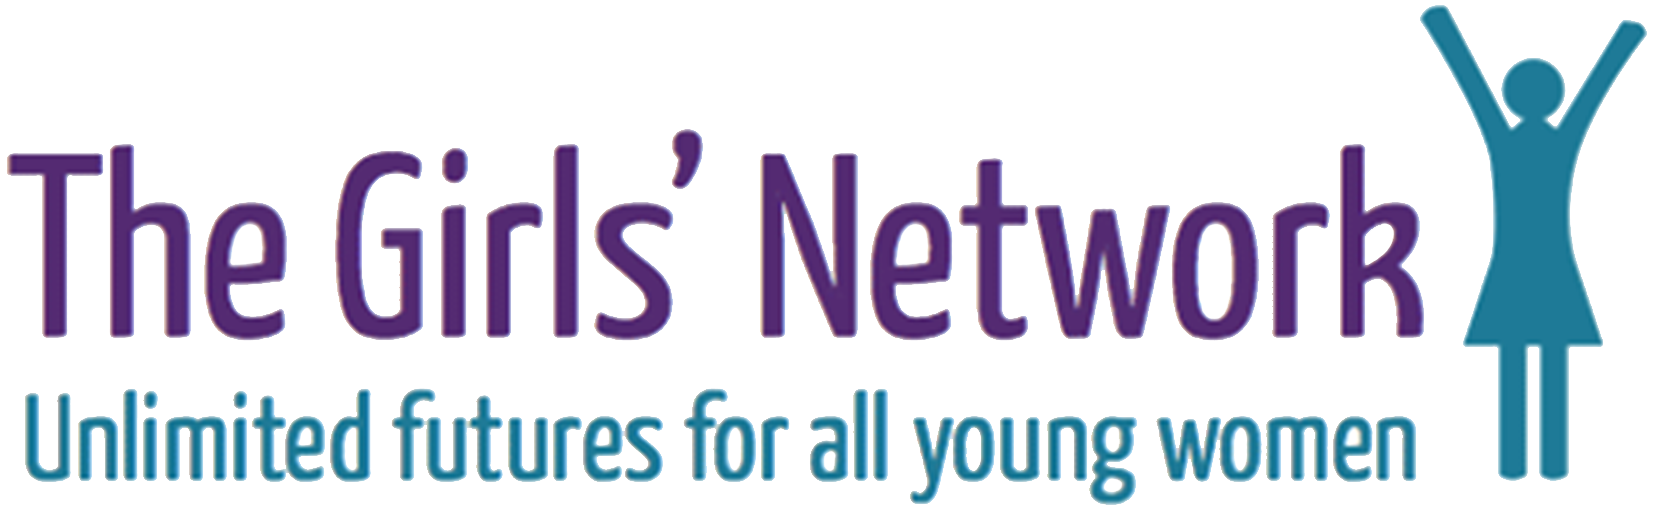 the girls' network logo